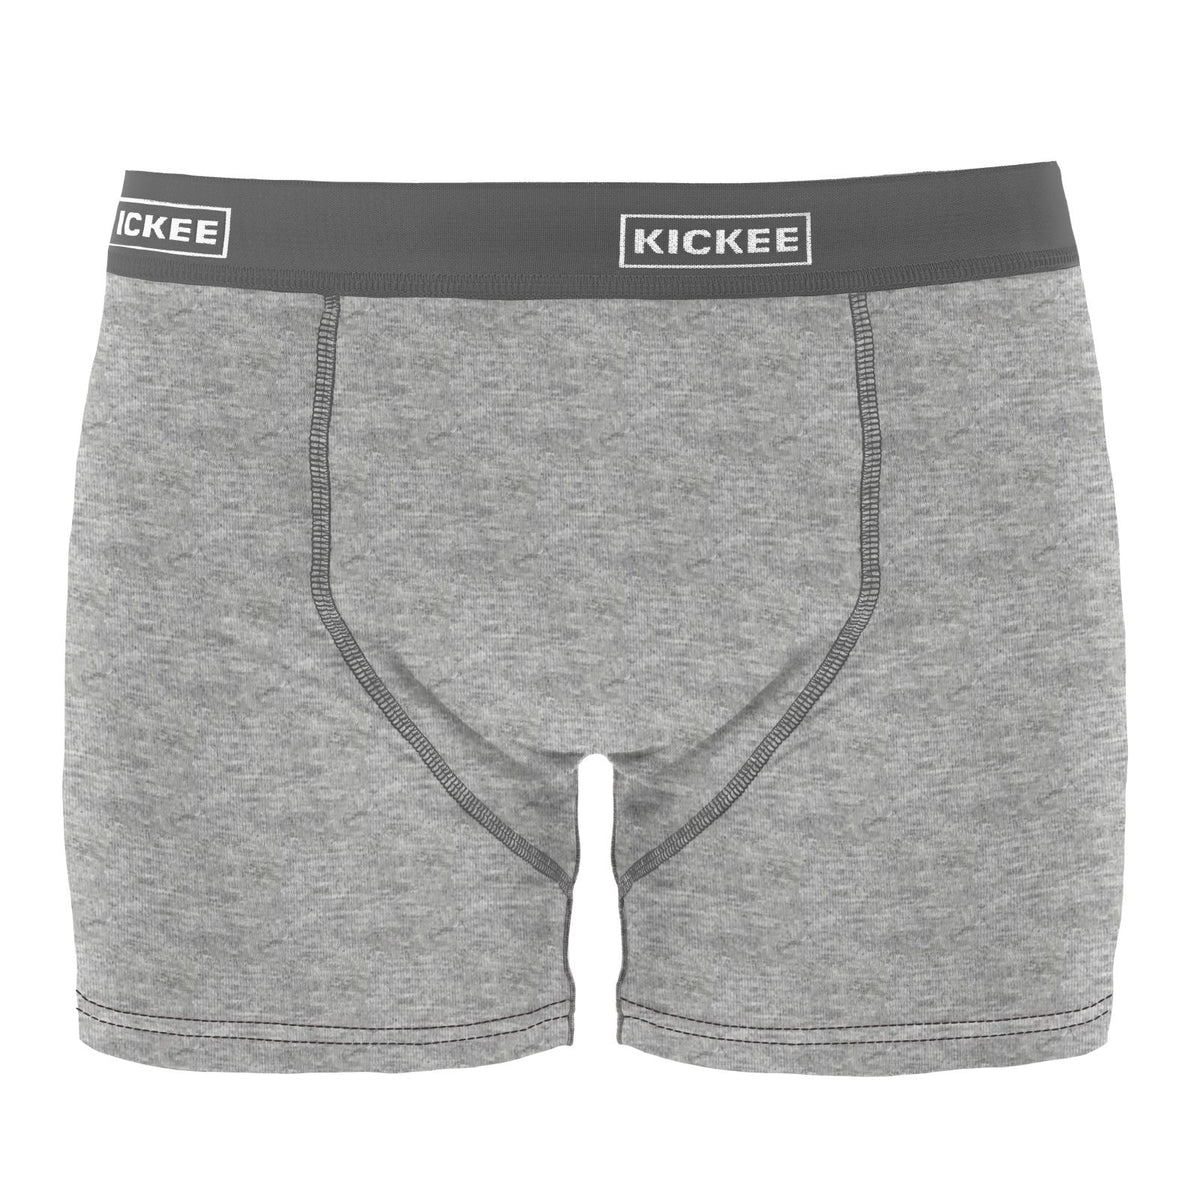 Kickee Pants: Men's Boxer Briefs: Solid Heathered Mist